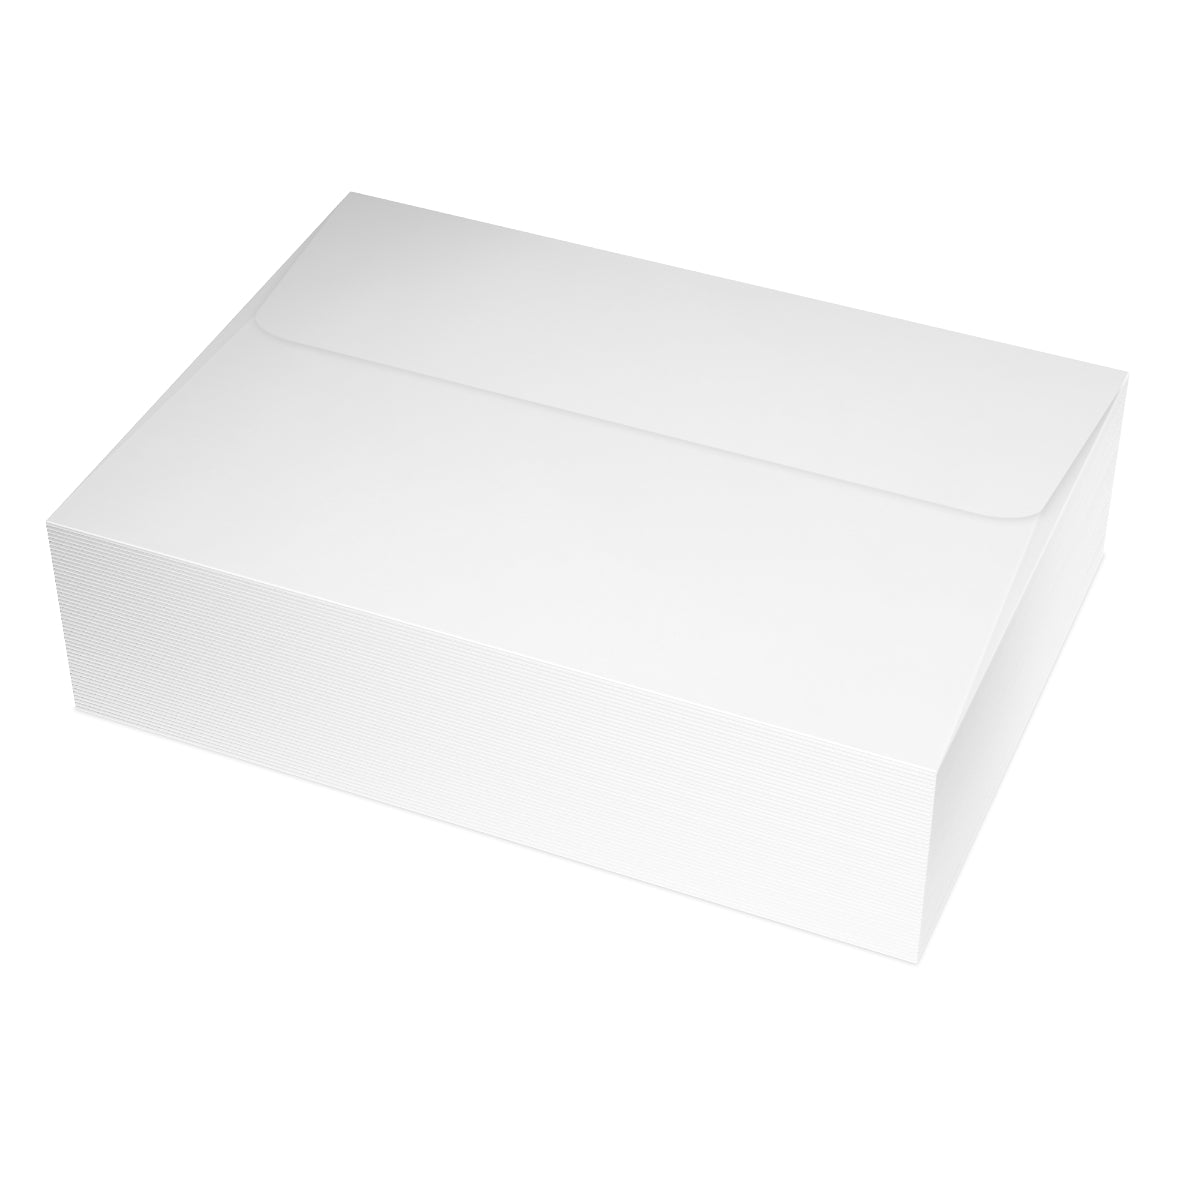 Santa Barbara Folded Matte Notecards + Envelopes (10pcs)